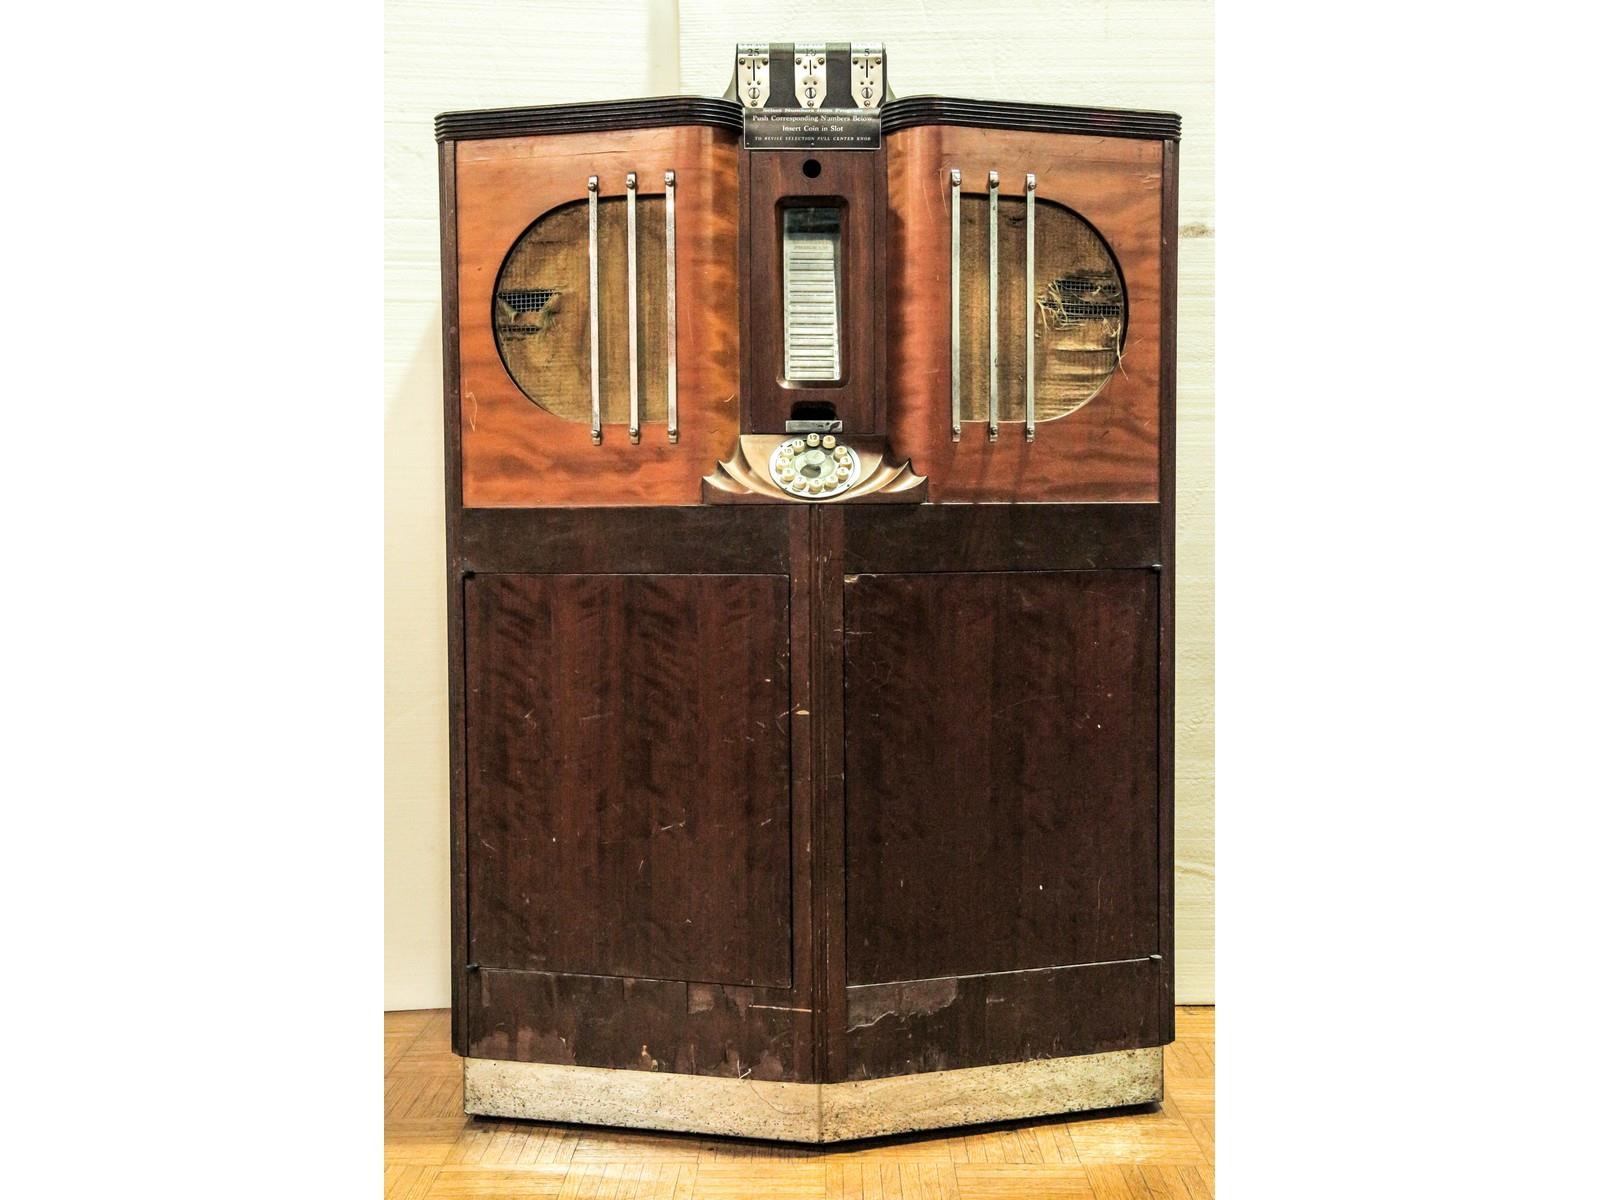 Mills Do-Re-Mi Jukebox Antique Vintage